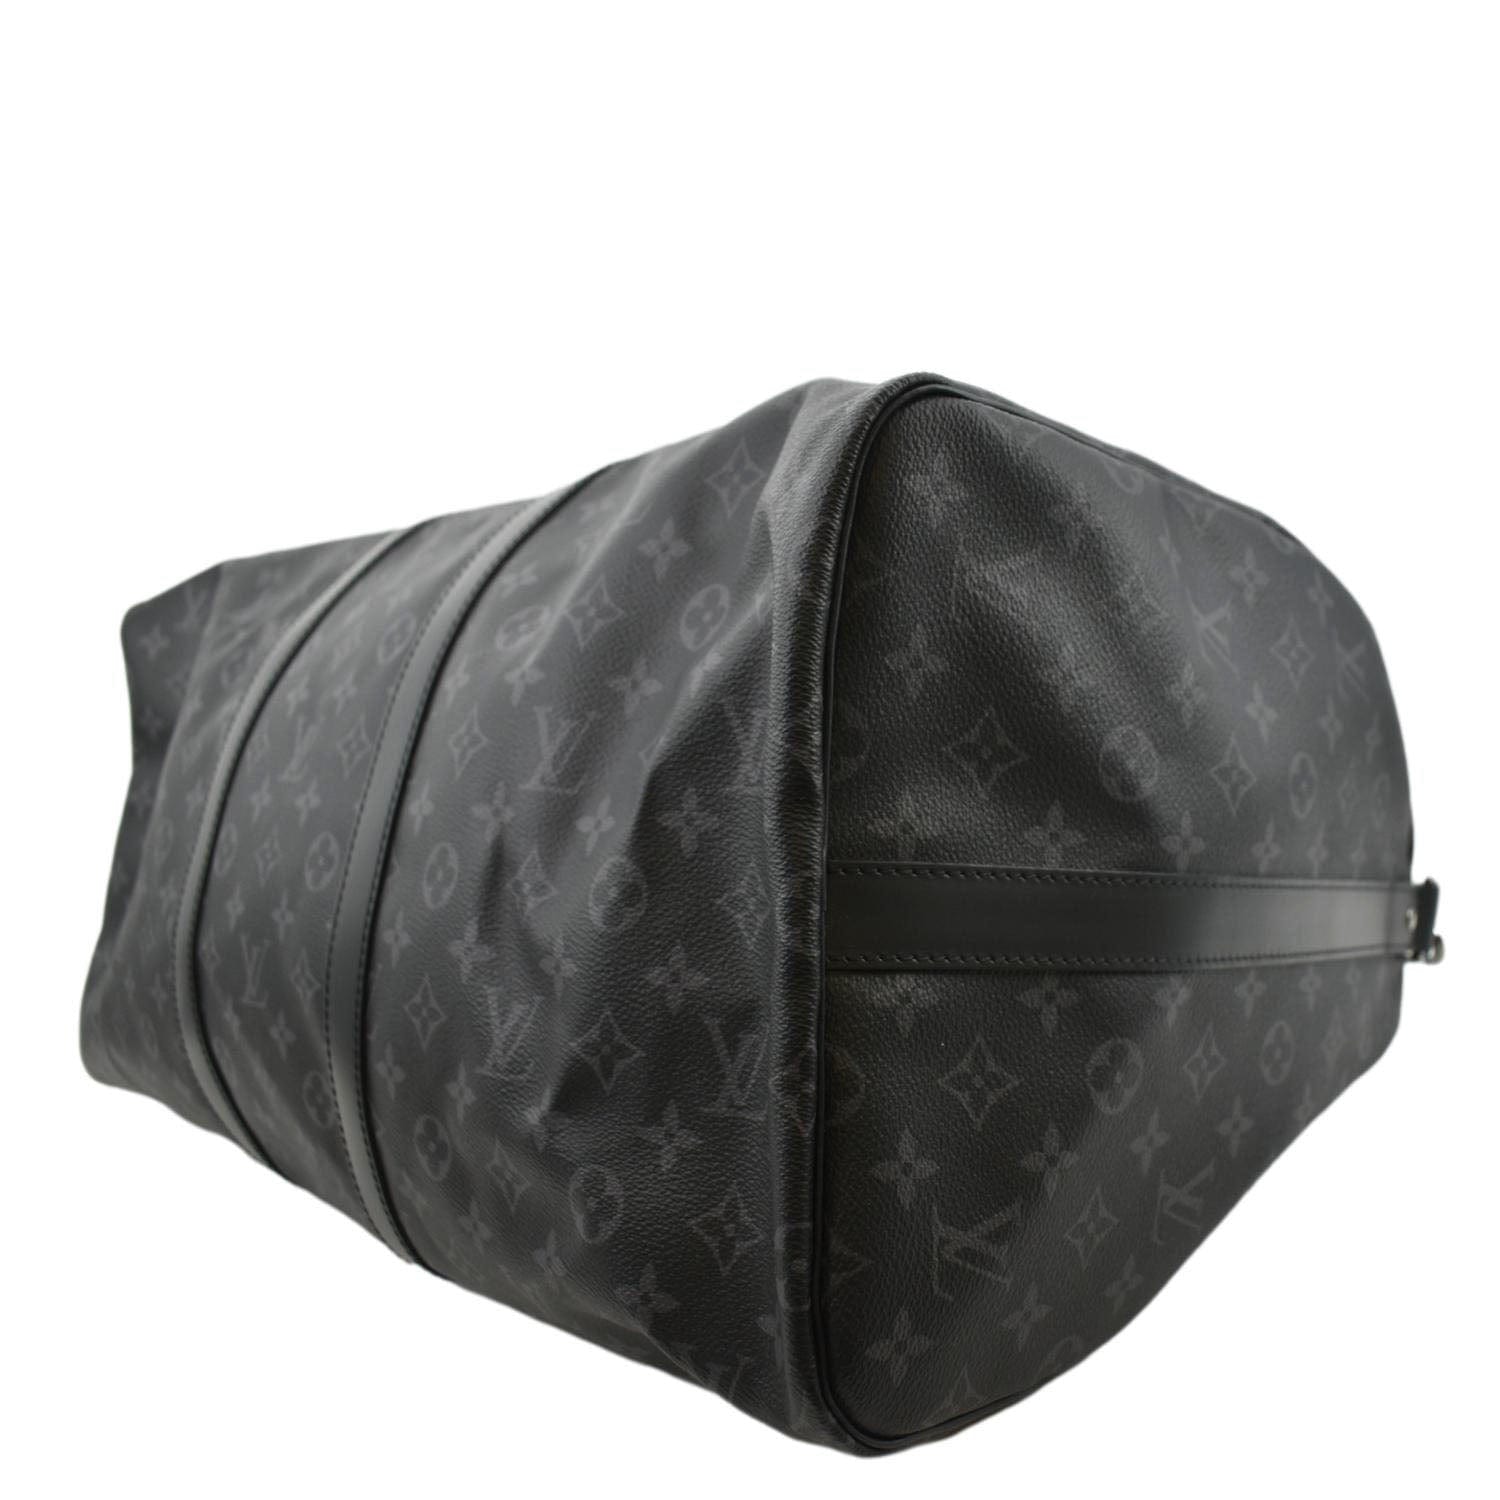 Keepall 55 Monogram Bandouliere – Keeks Designer Handbags